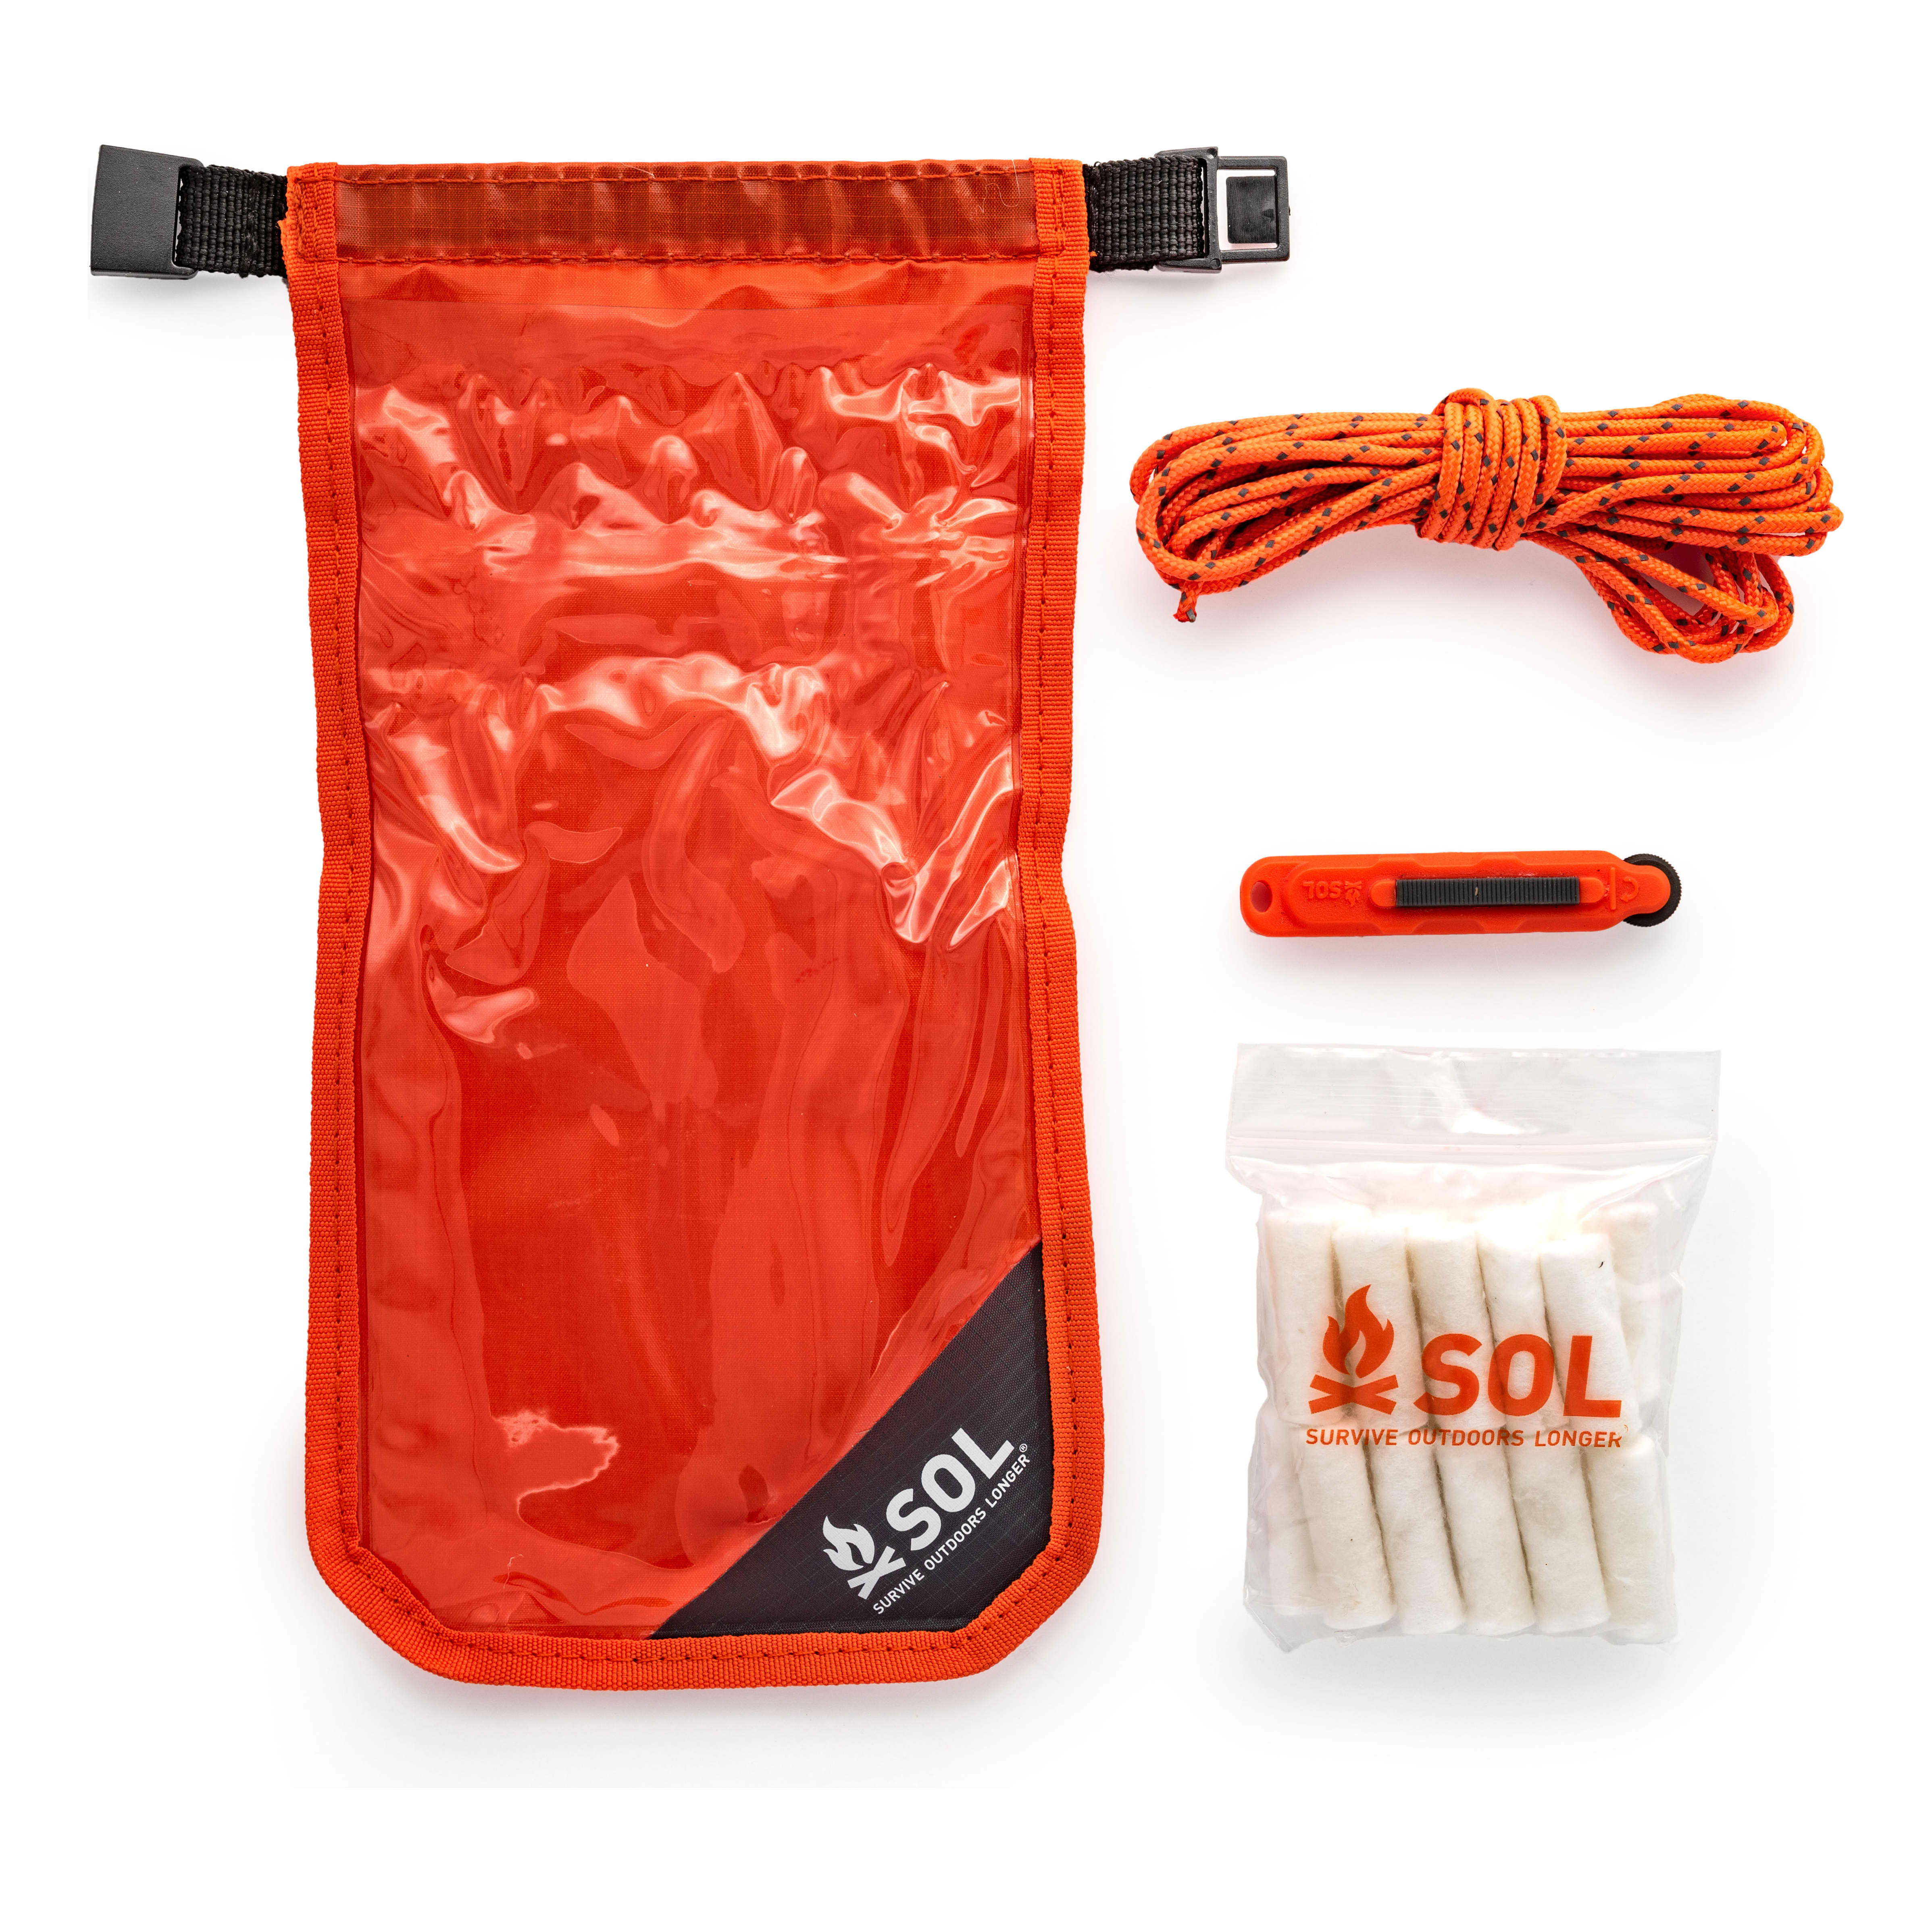 S.O.L.® Fire Lite™ Fire Starting Kit 